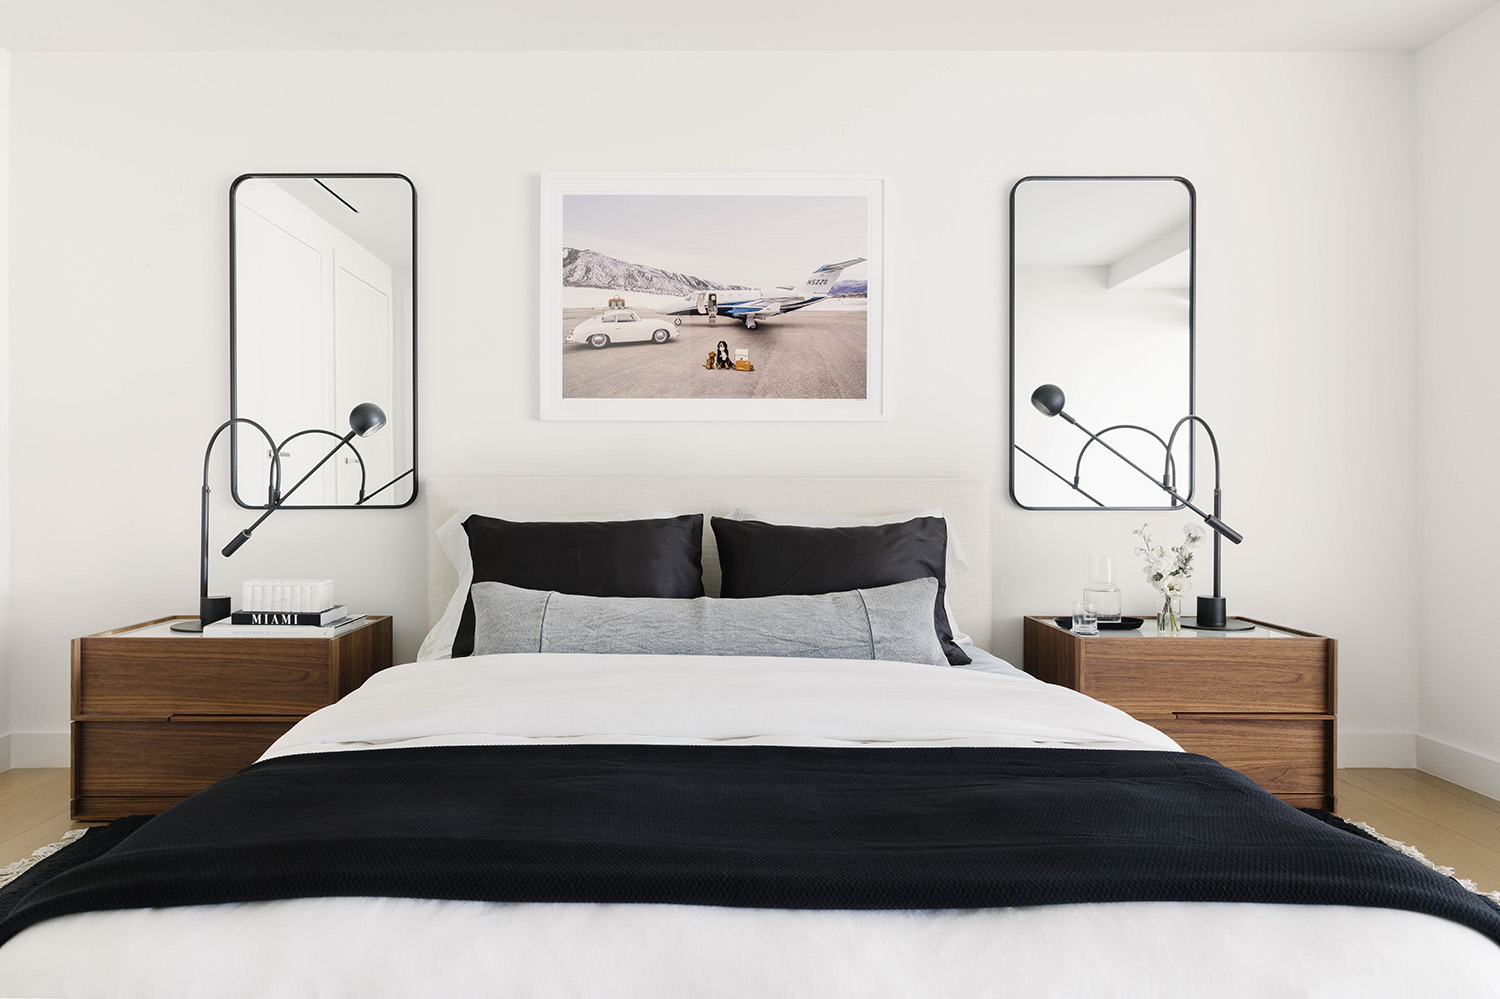 30 Designer-Loved Bedroom Wall Decor Ideas | Havenly Blog ...